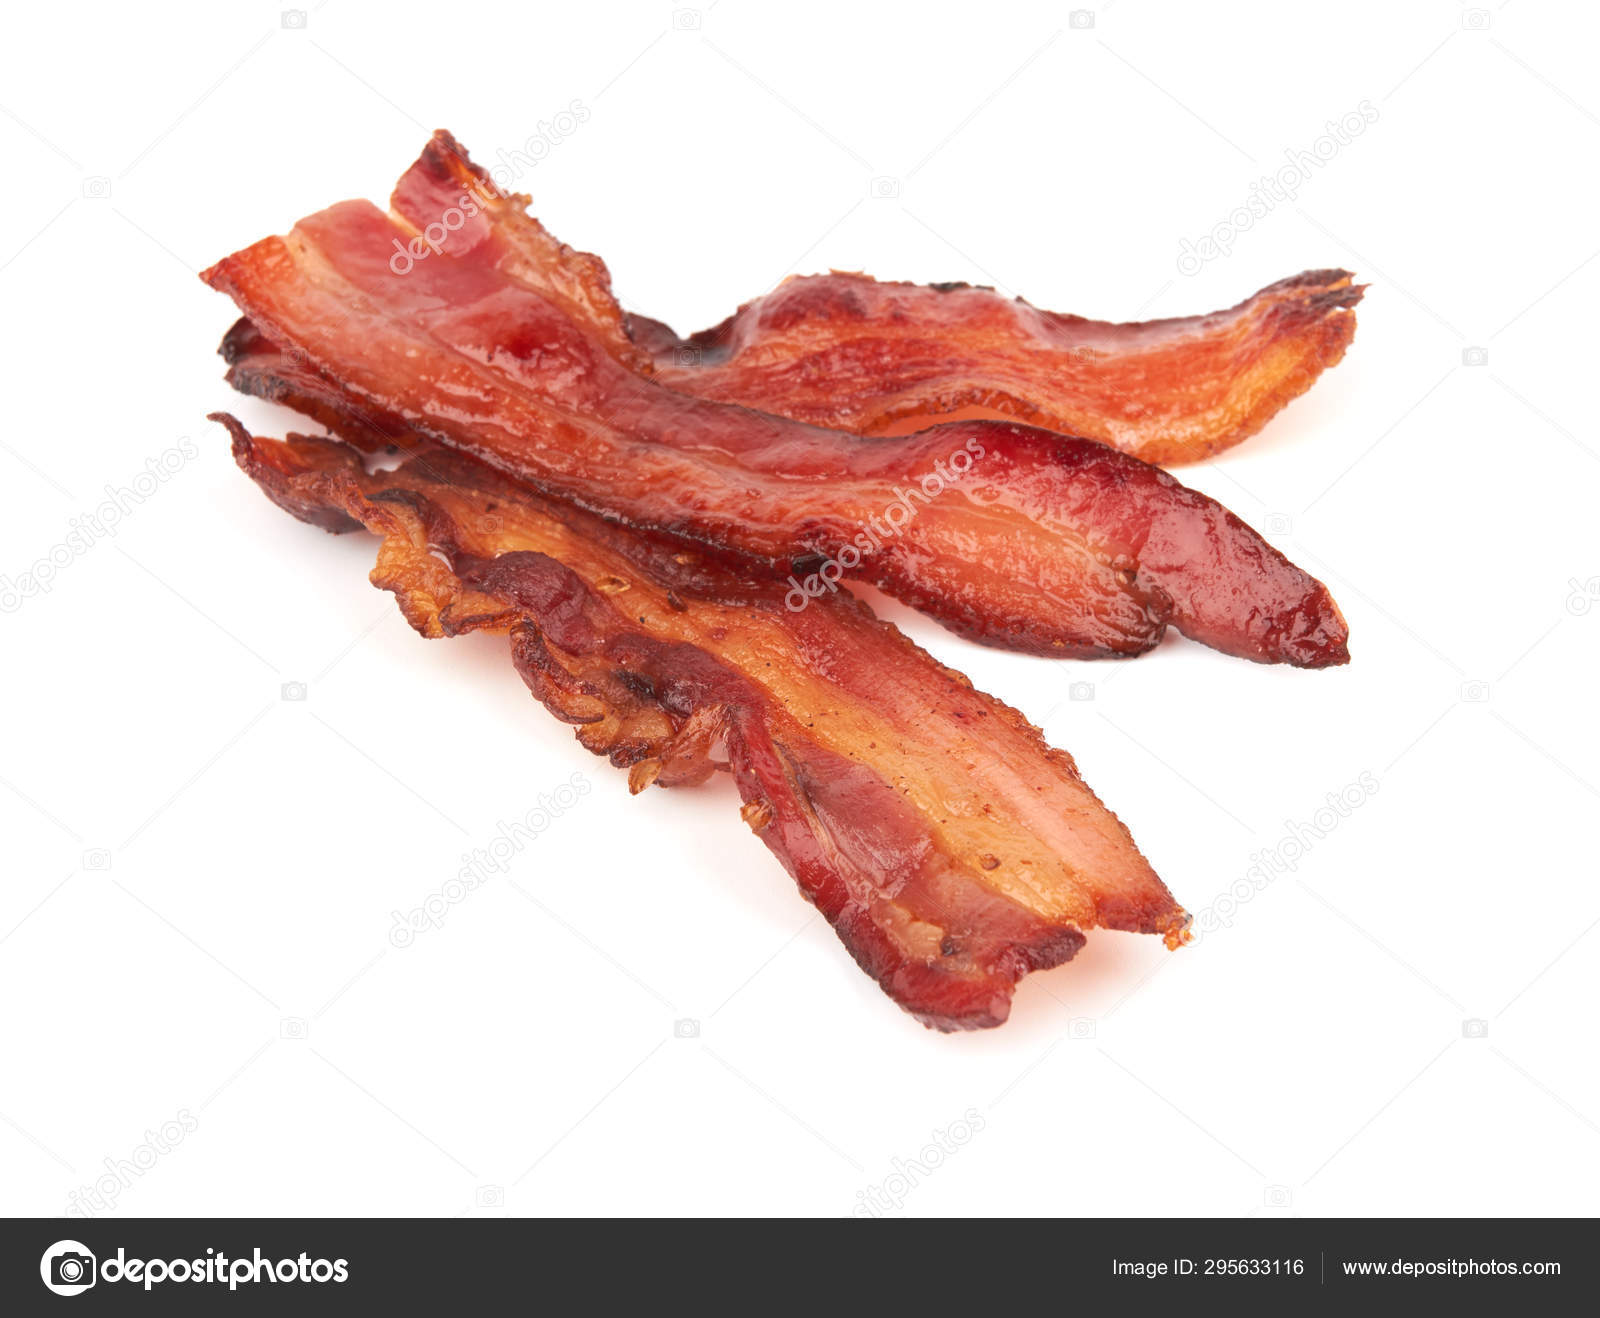 https://st4.depositphotos.com/1766687/29563/i/1600/depositphotos_295633116-stock-photo-cooked-slices-of-bacon.jpg